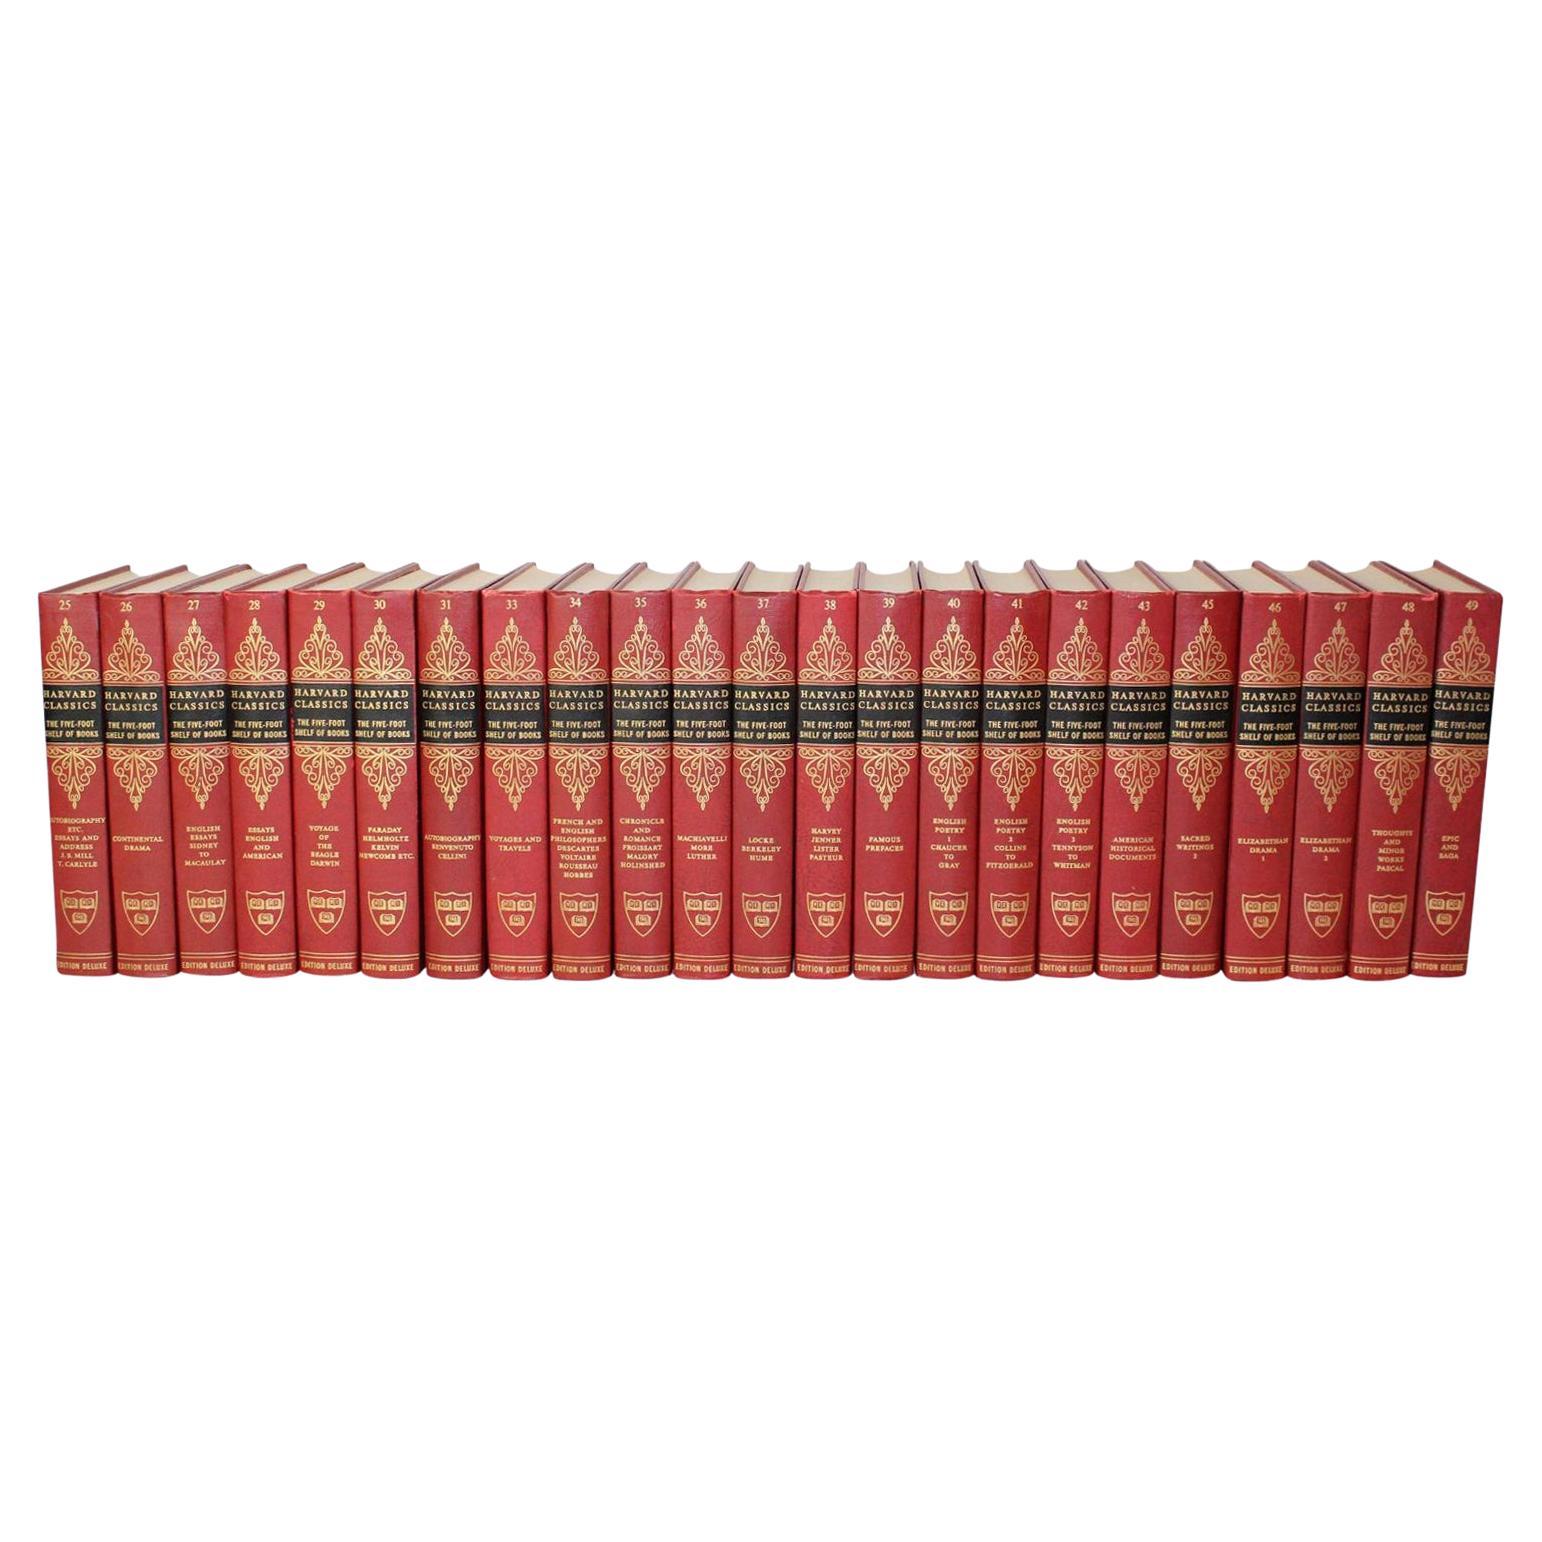 20th Century American Collection of Twenty Five Edition Harvard Classics Books For Sale